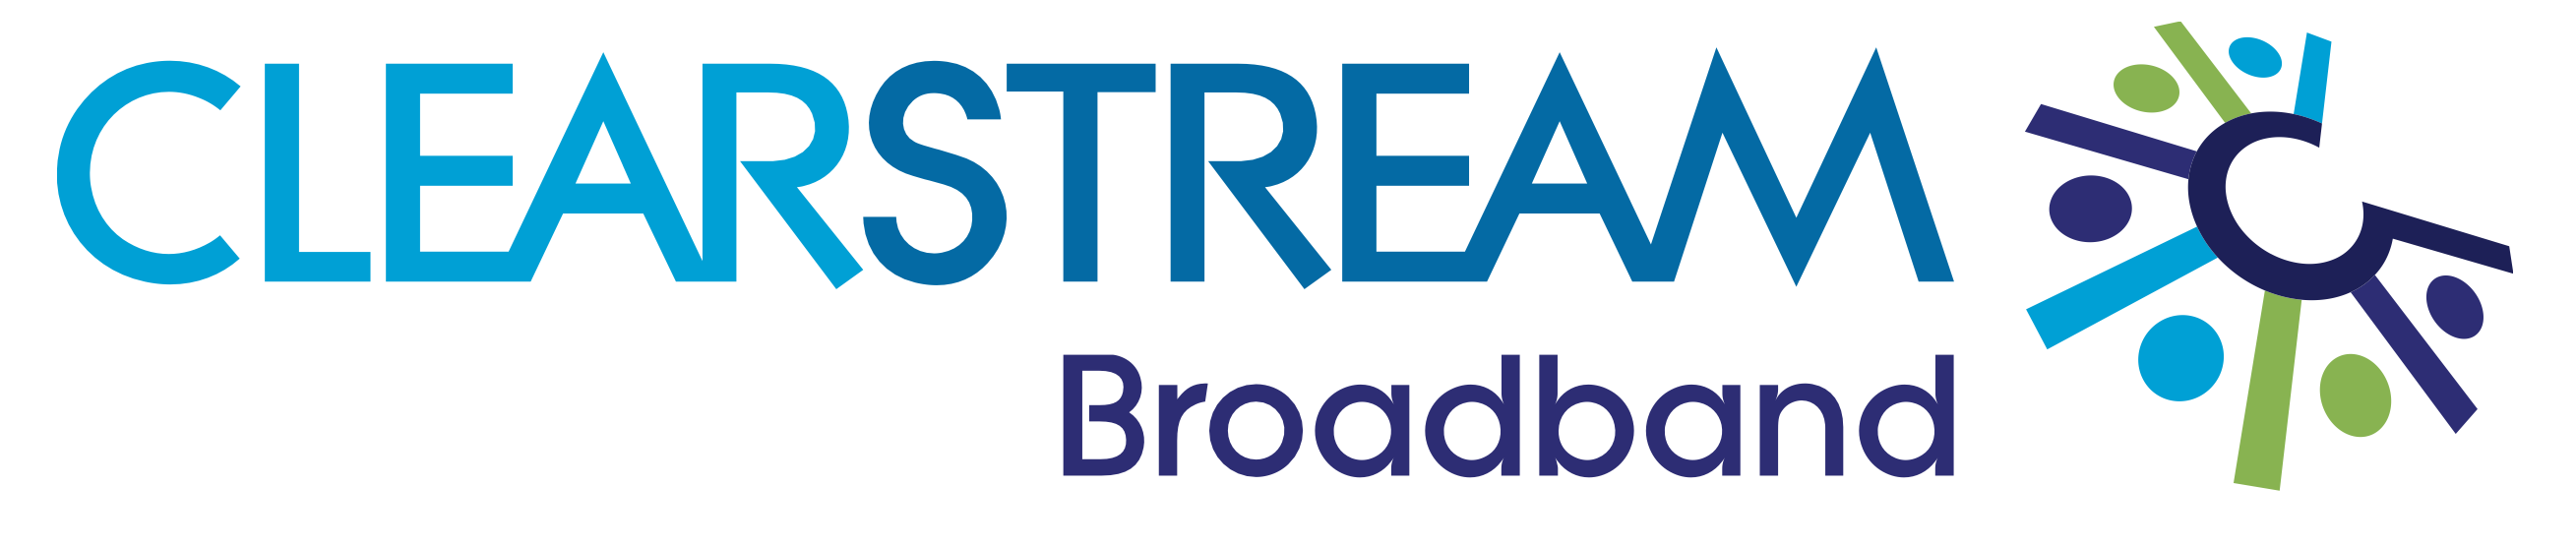 Clearstream Broadband